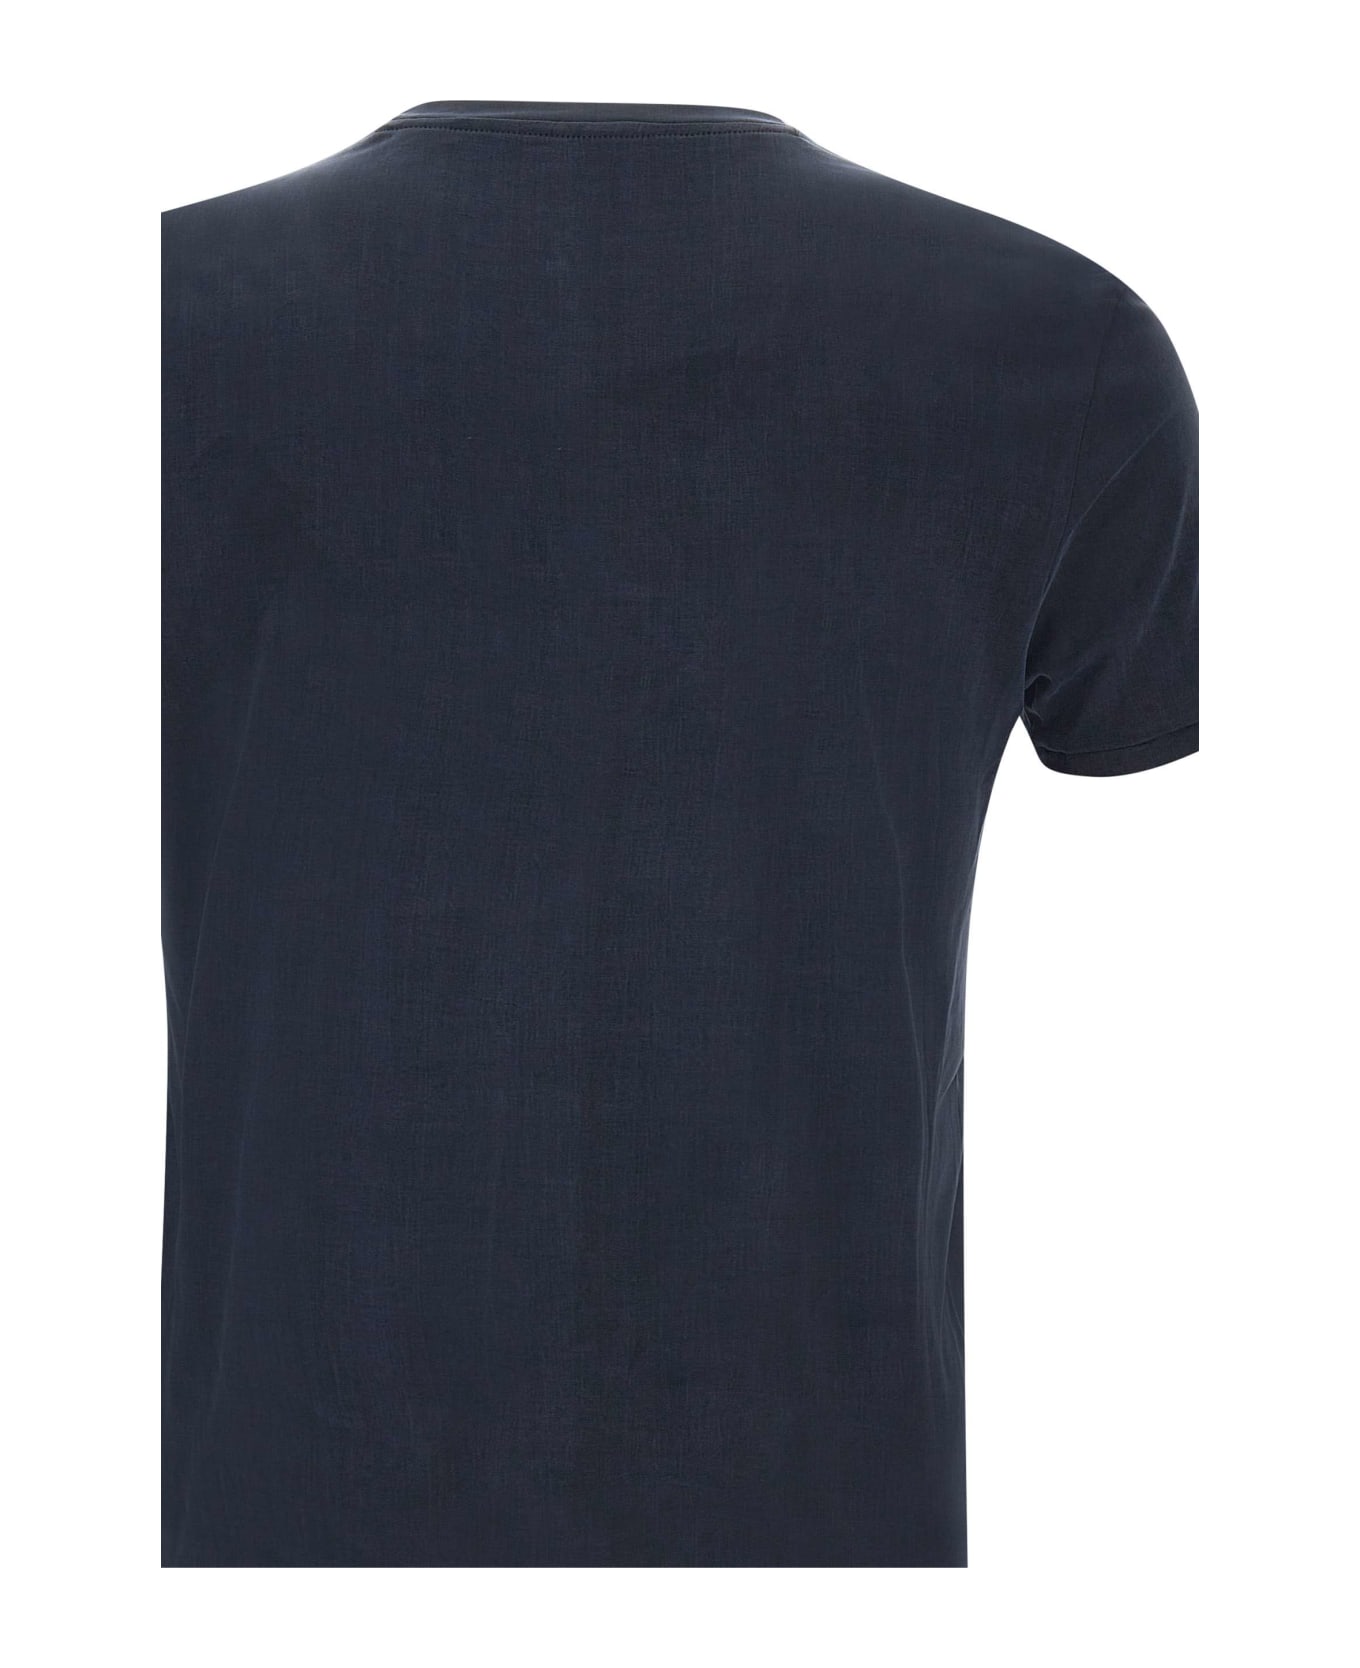 RRD - Roberto Ricci Design 'cupro Shirty' T-shirt - Nero